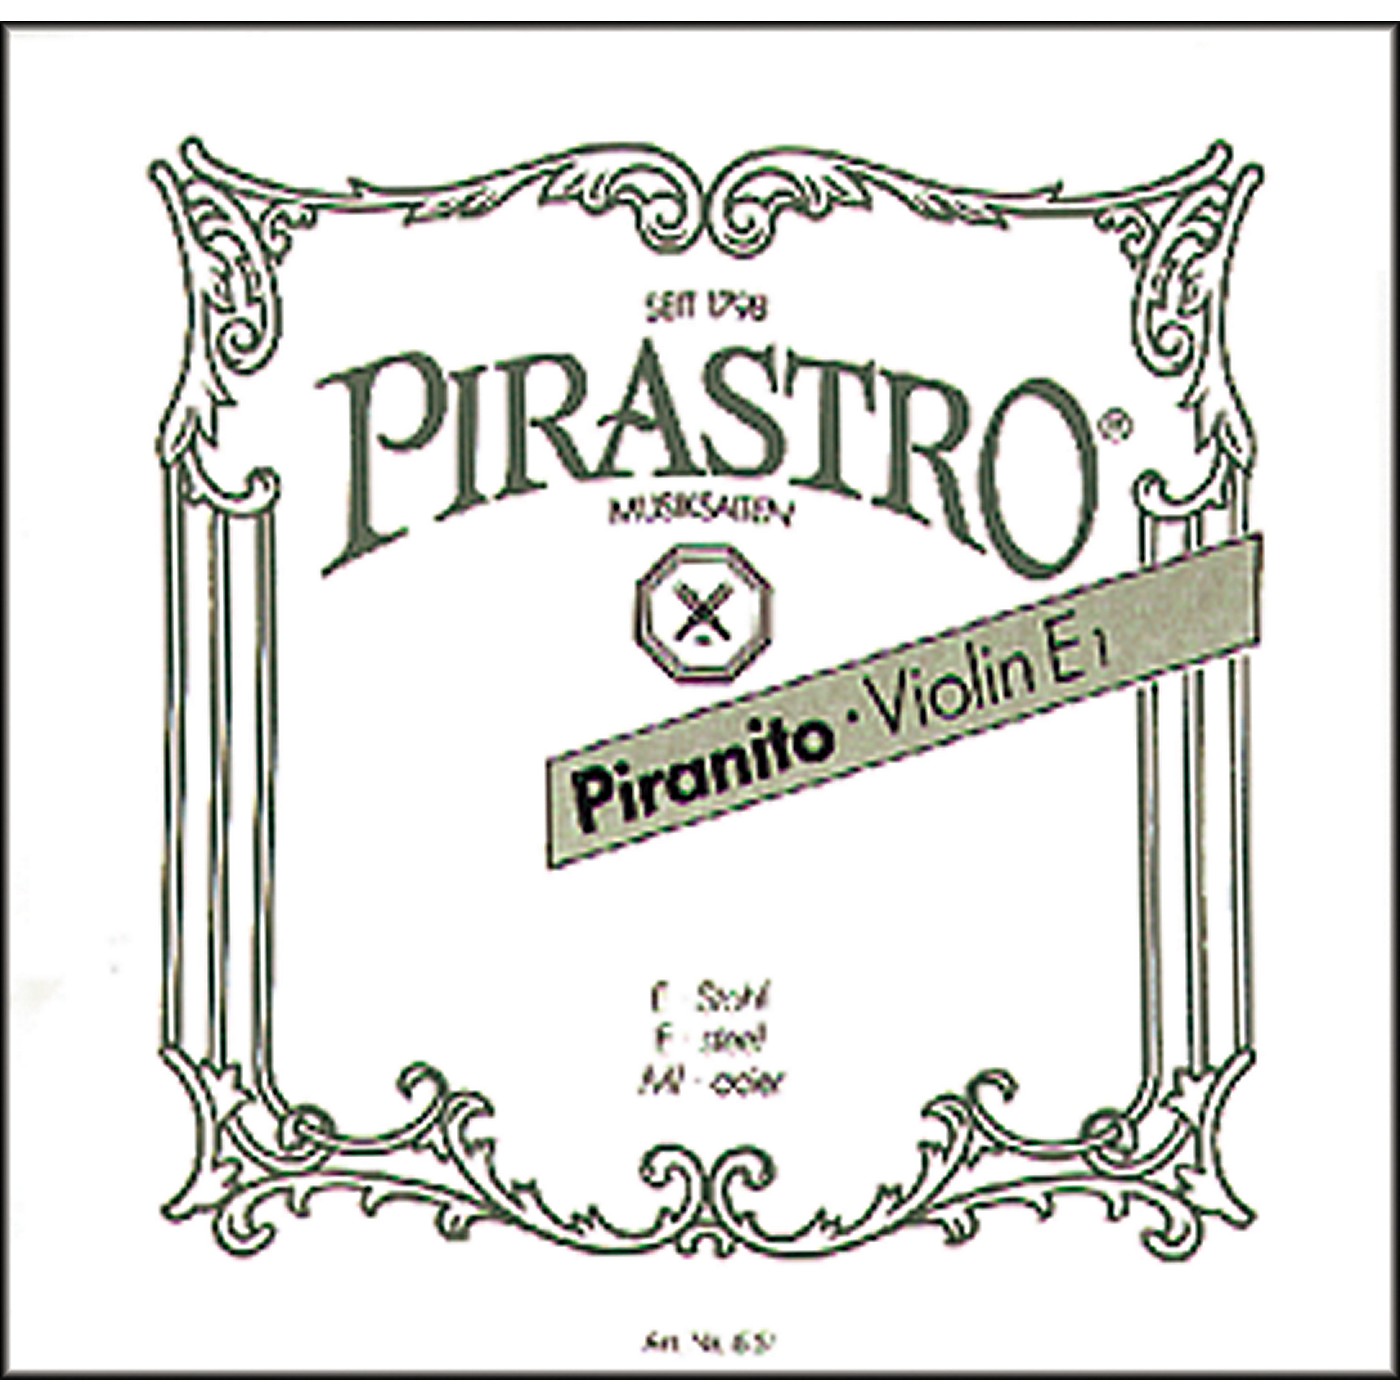 Pirastro Piranito Series Violin D String thumbnail